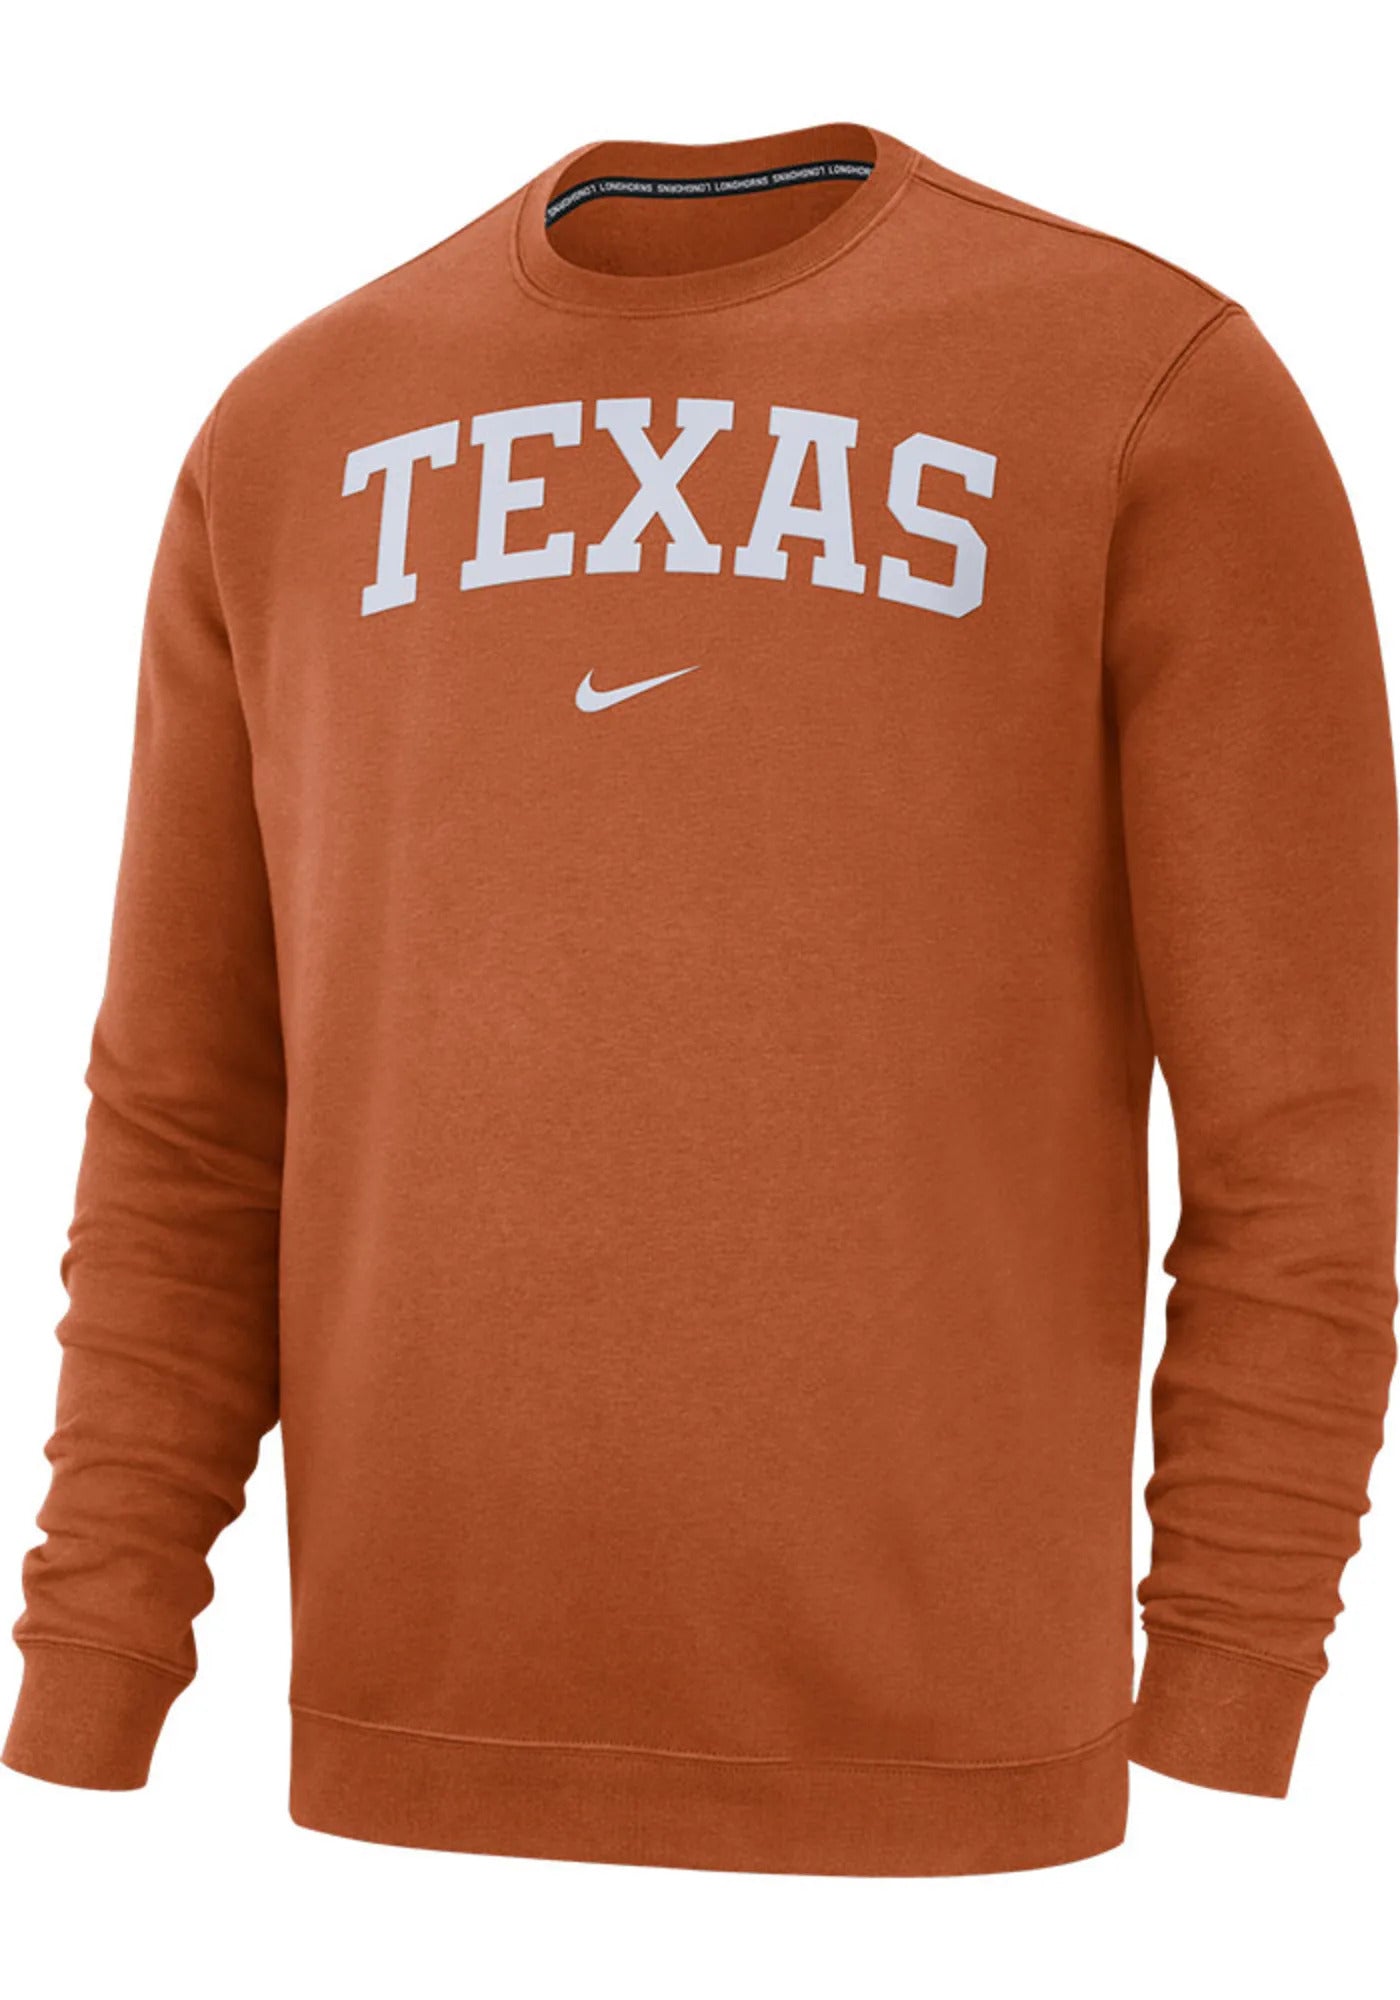 Men's Texas Longhorns Nike Club Burnt Orange Crew Neck Sweatshirt